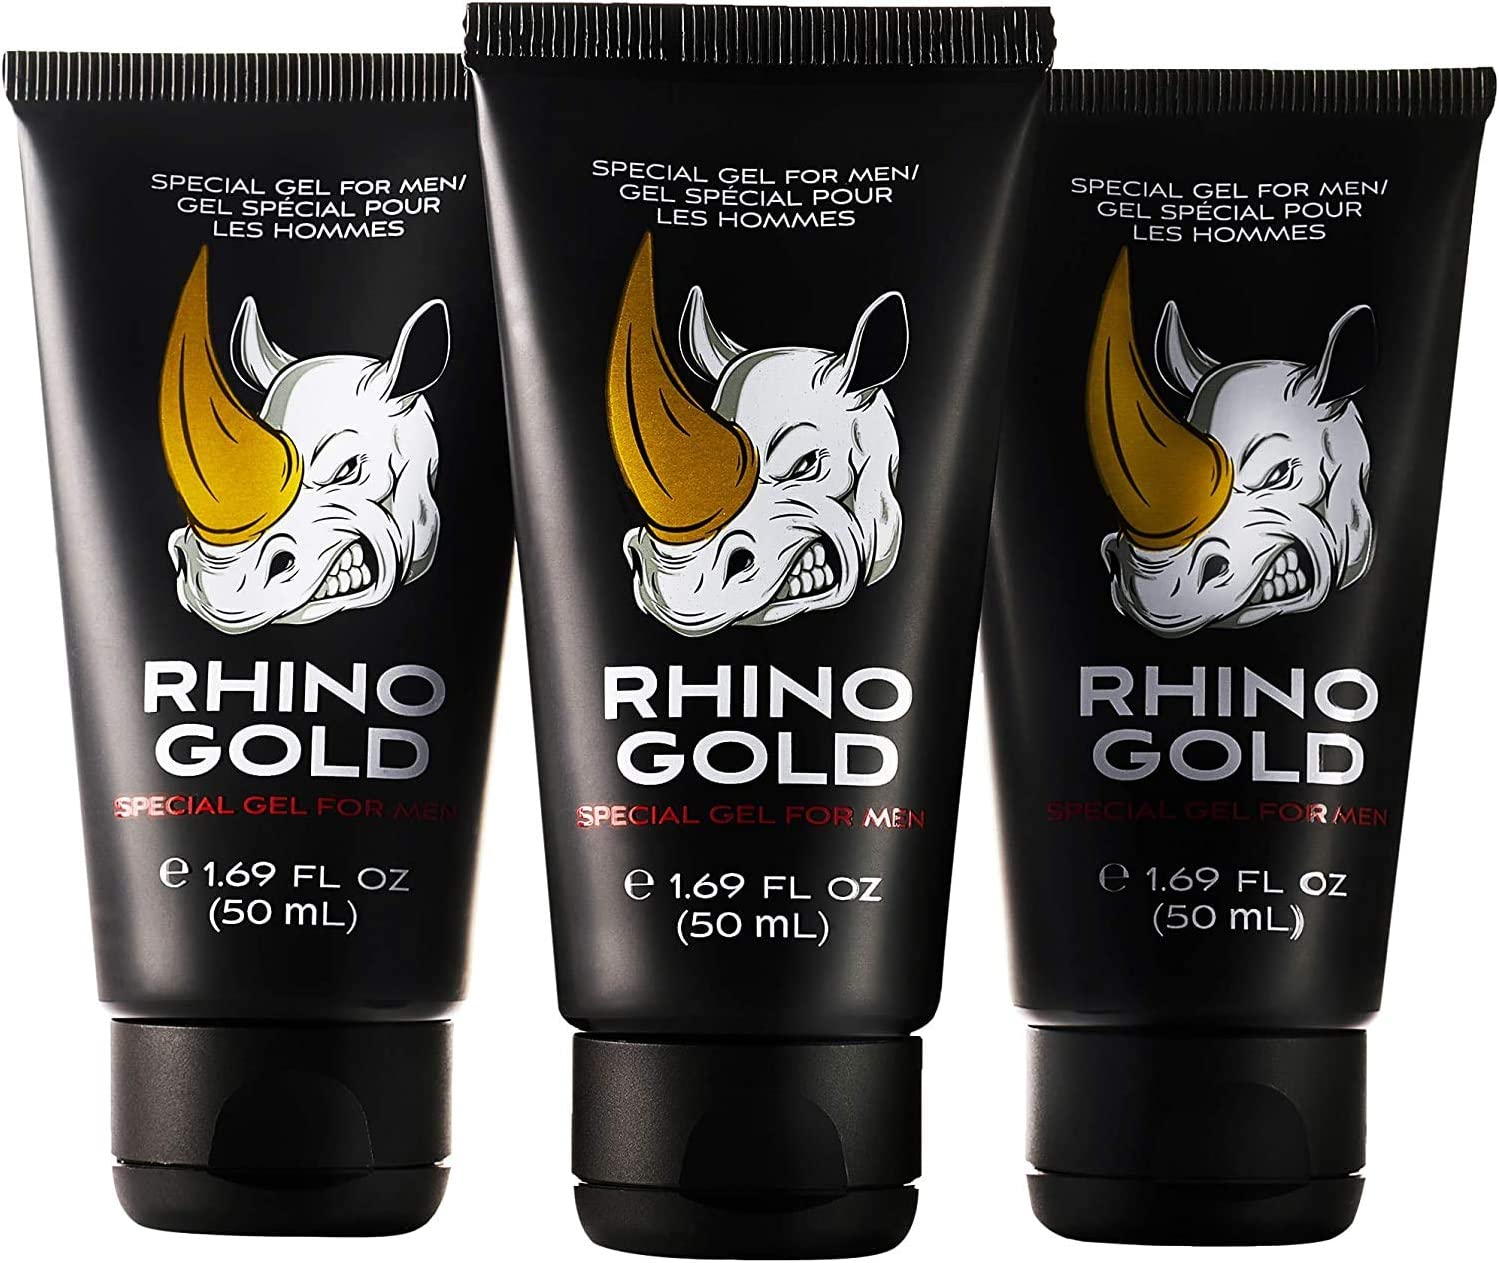 Rhino Gold Gel - forum - pret - prospect - pareri